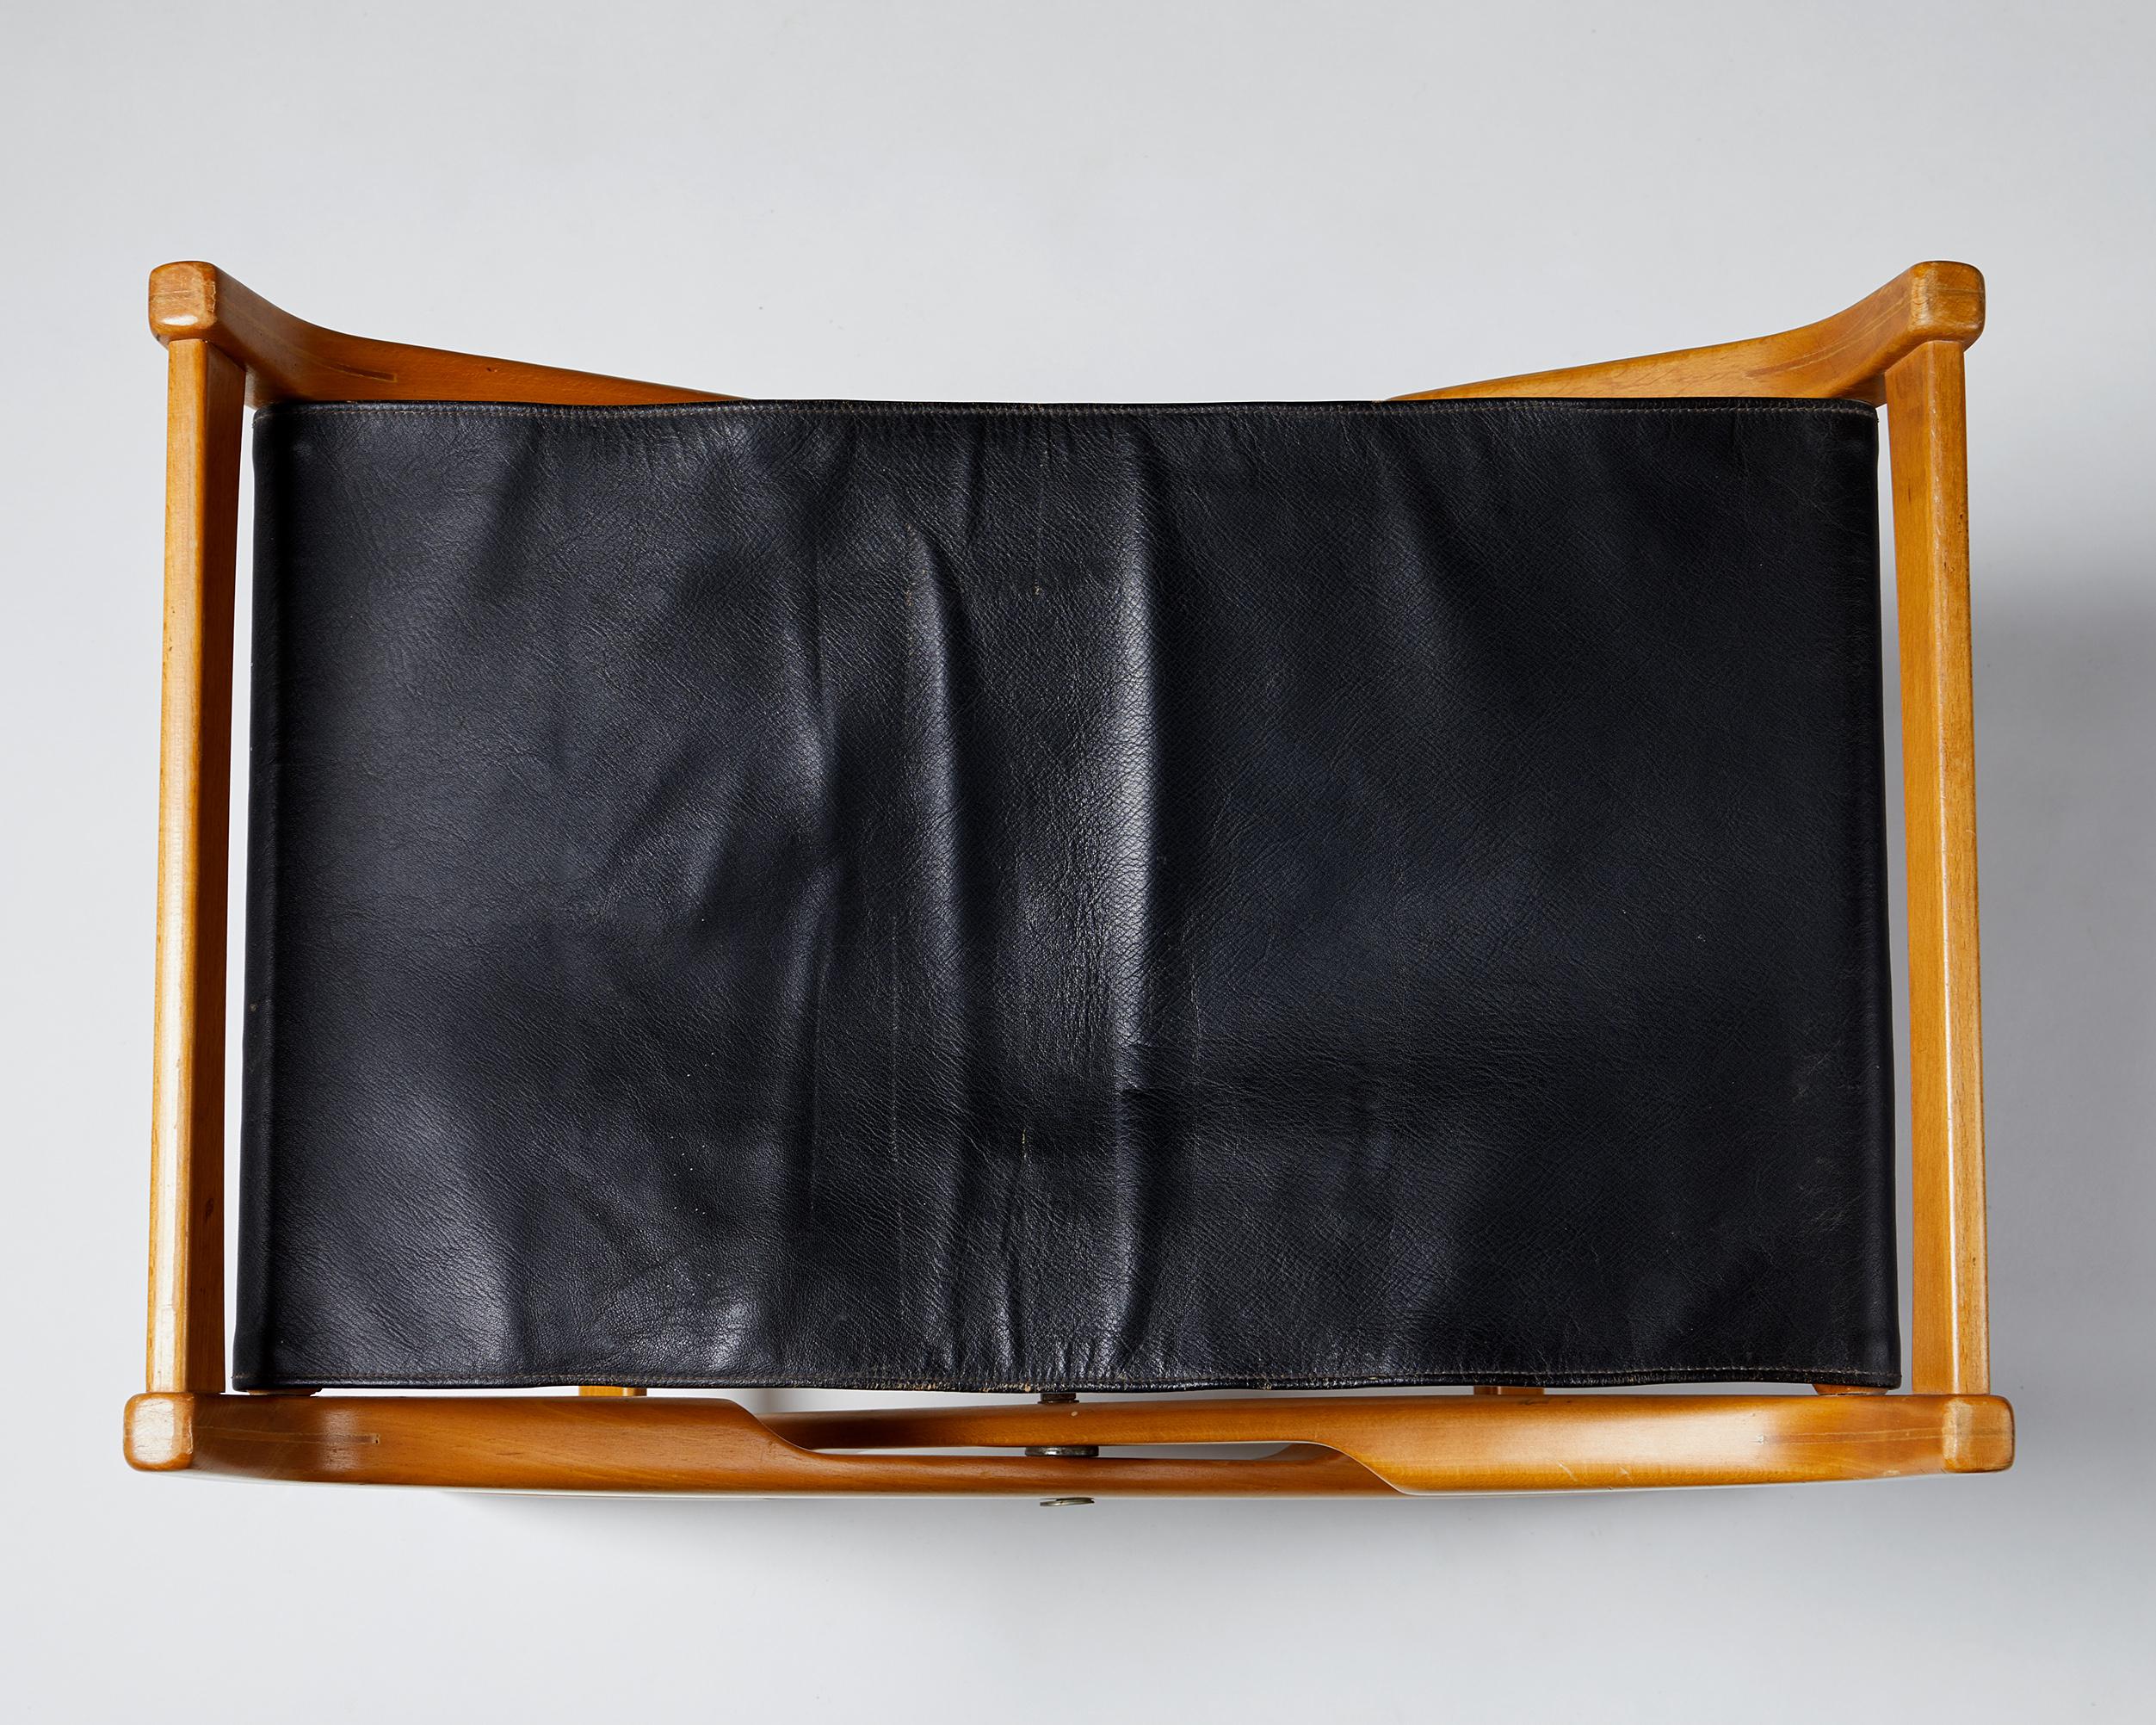 Leather Folding Stool “Futura” by David Rosén for Nordiska Kompaniet Sweden, 1960s